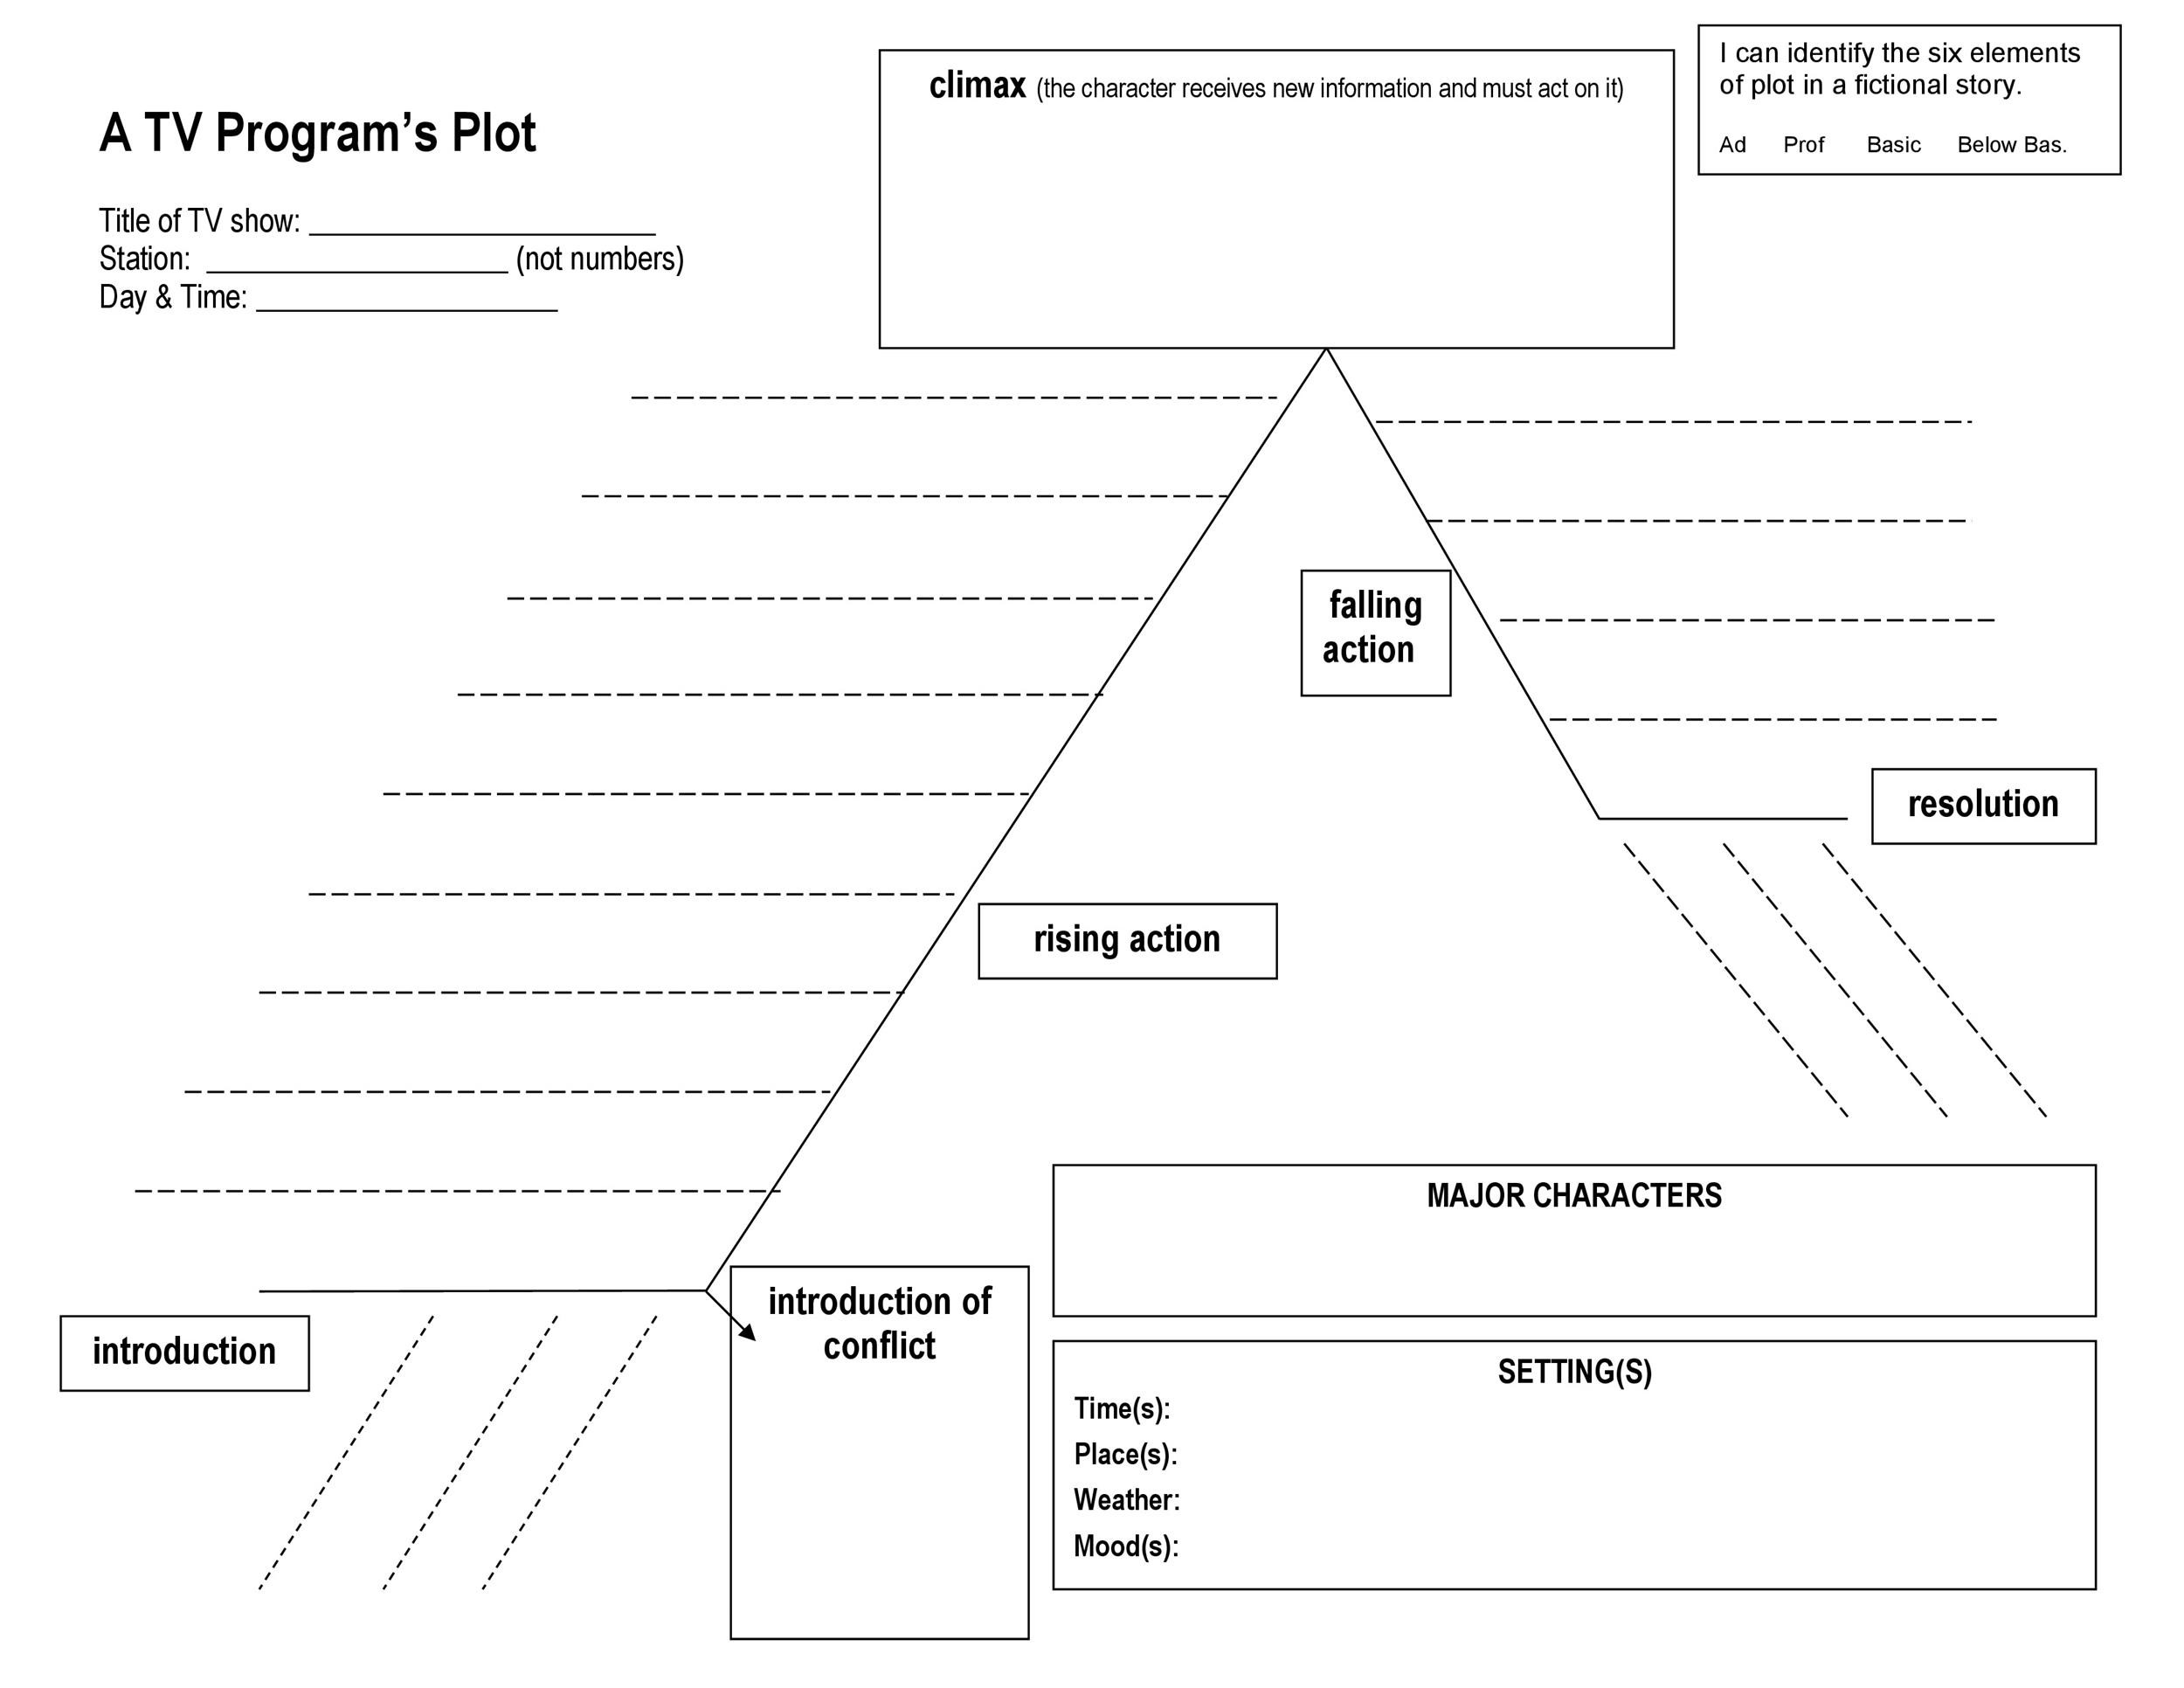 45-professional-plot-diagram-templates-plot-pyramid-templatelab